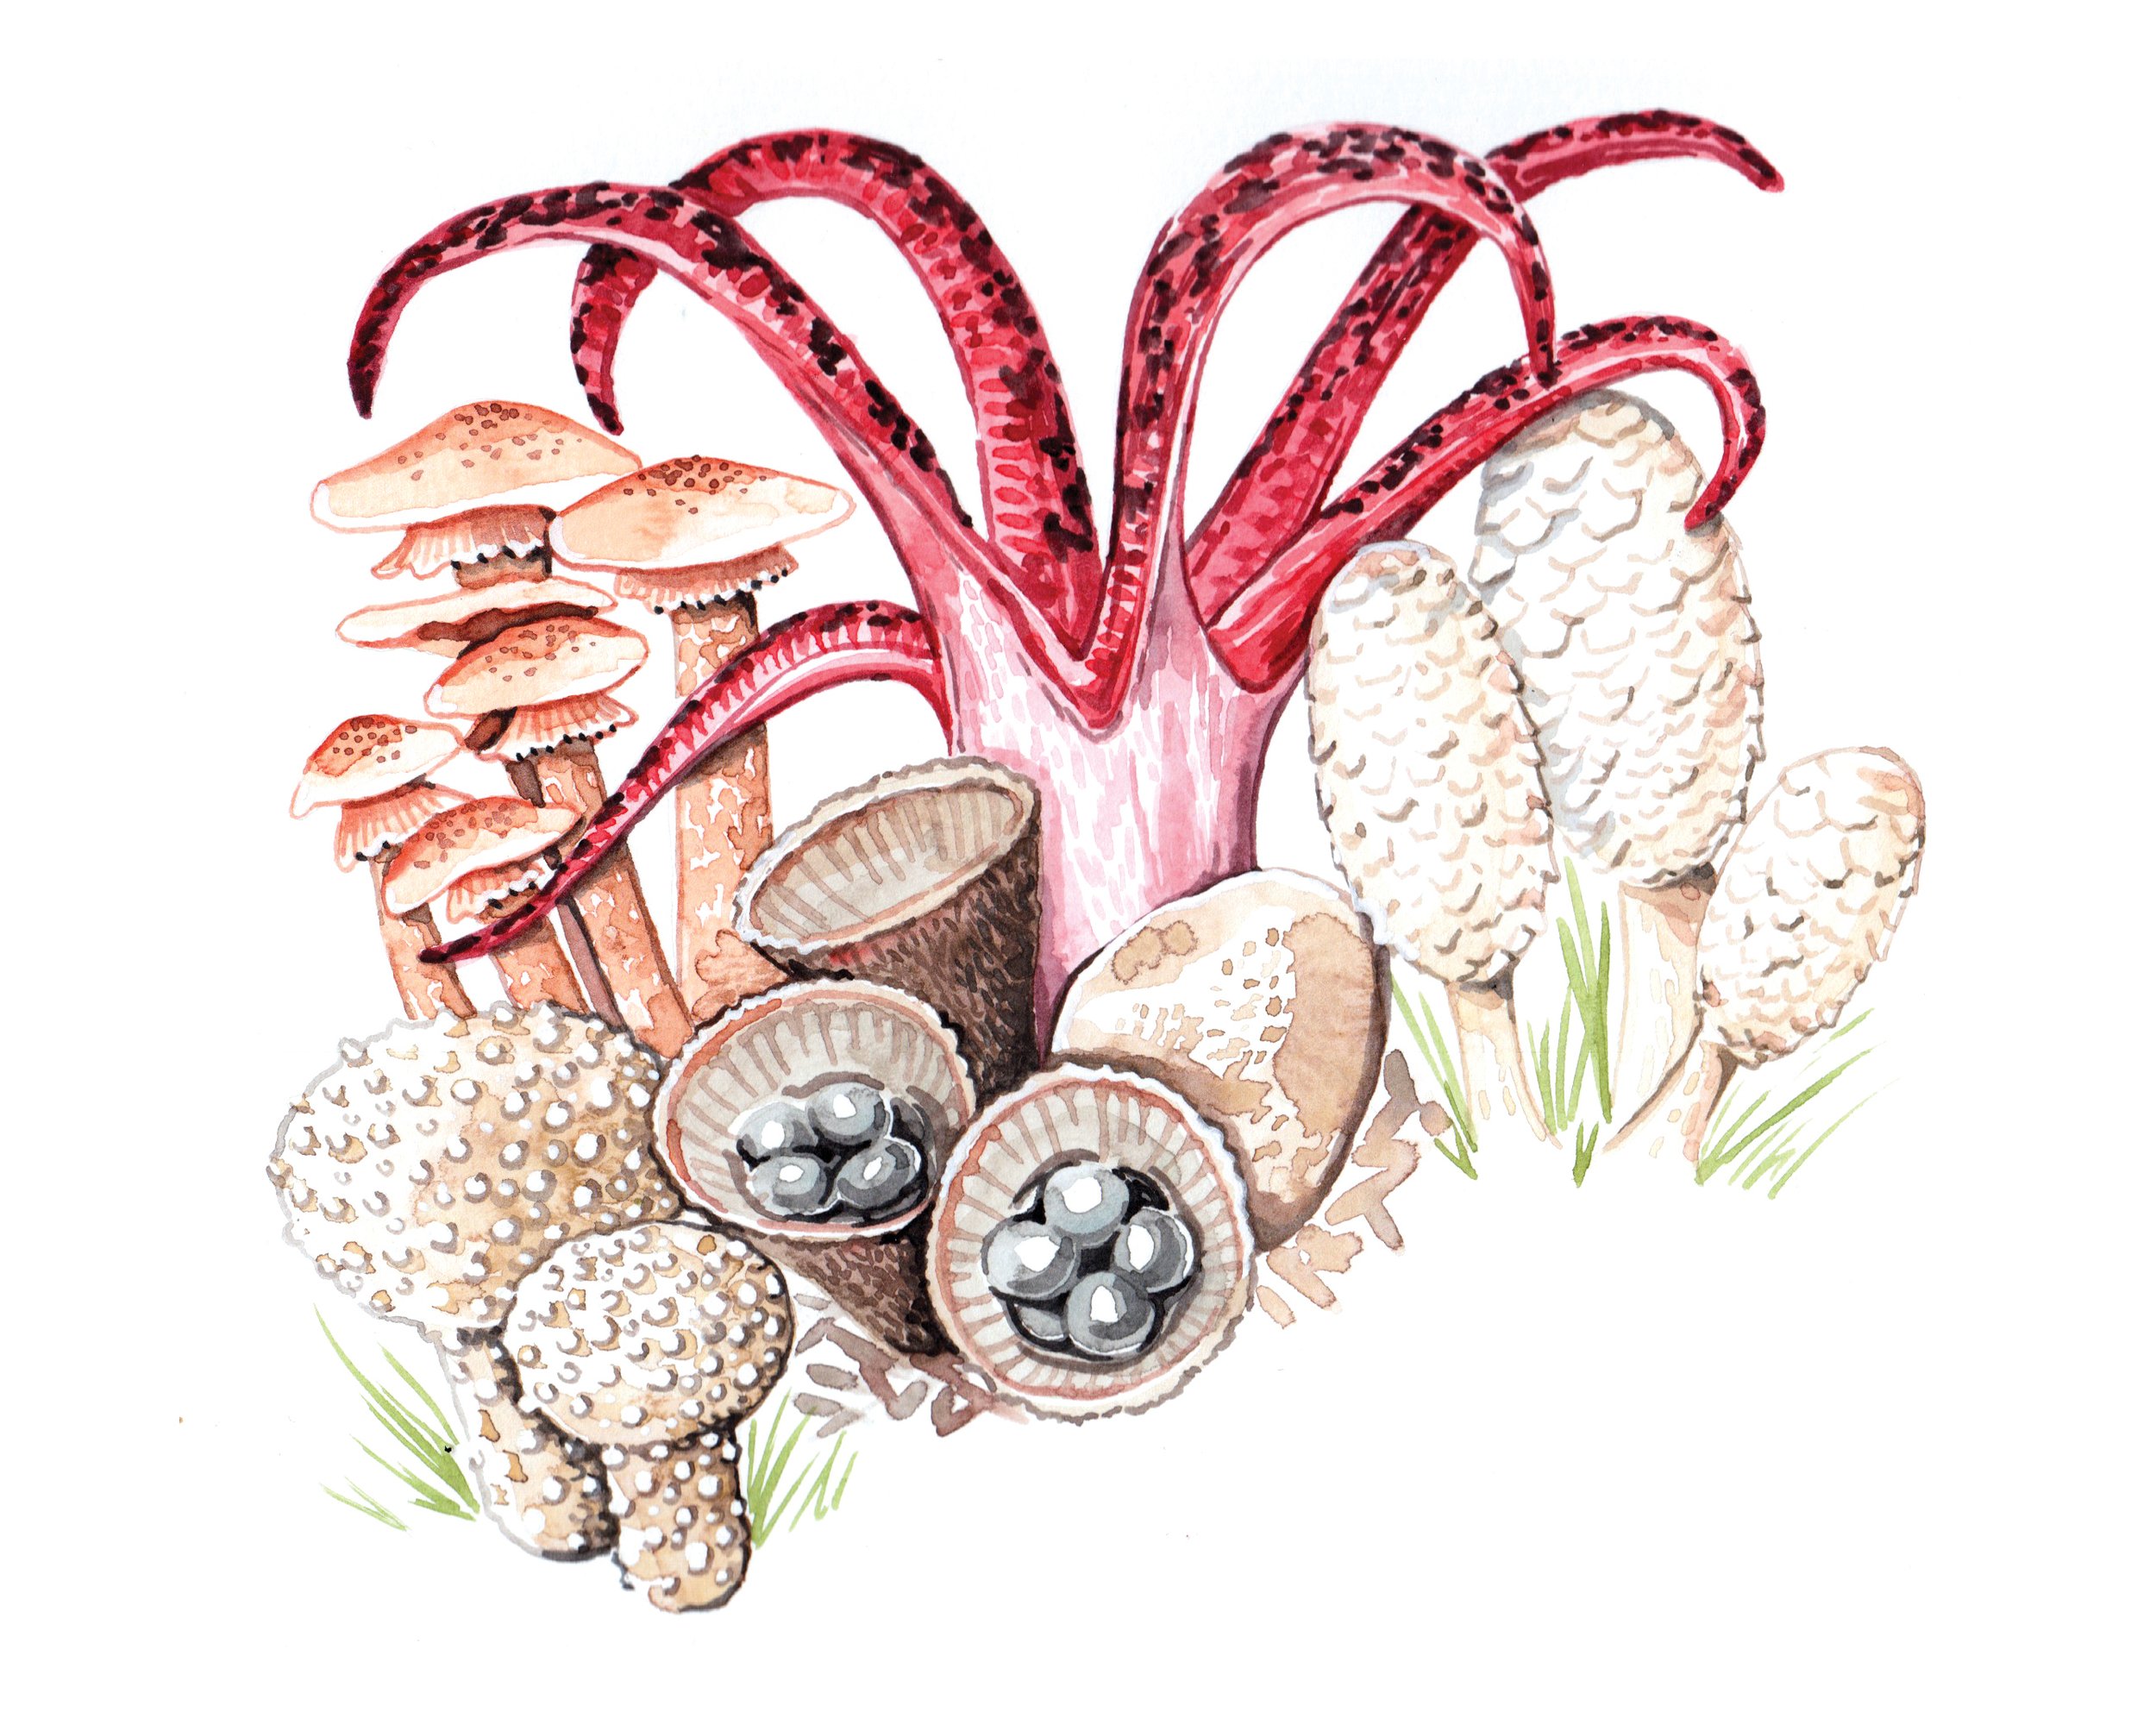 fungi watercolour illustration for Kew Gardens